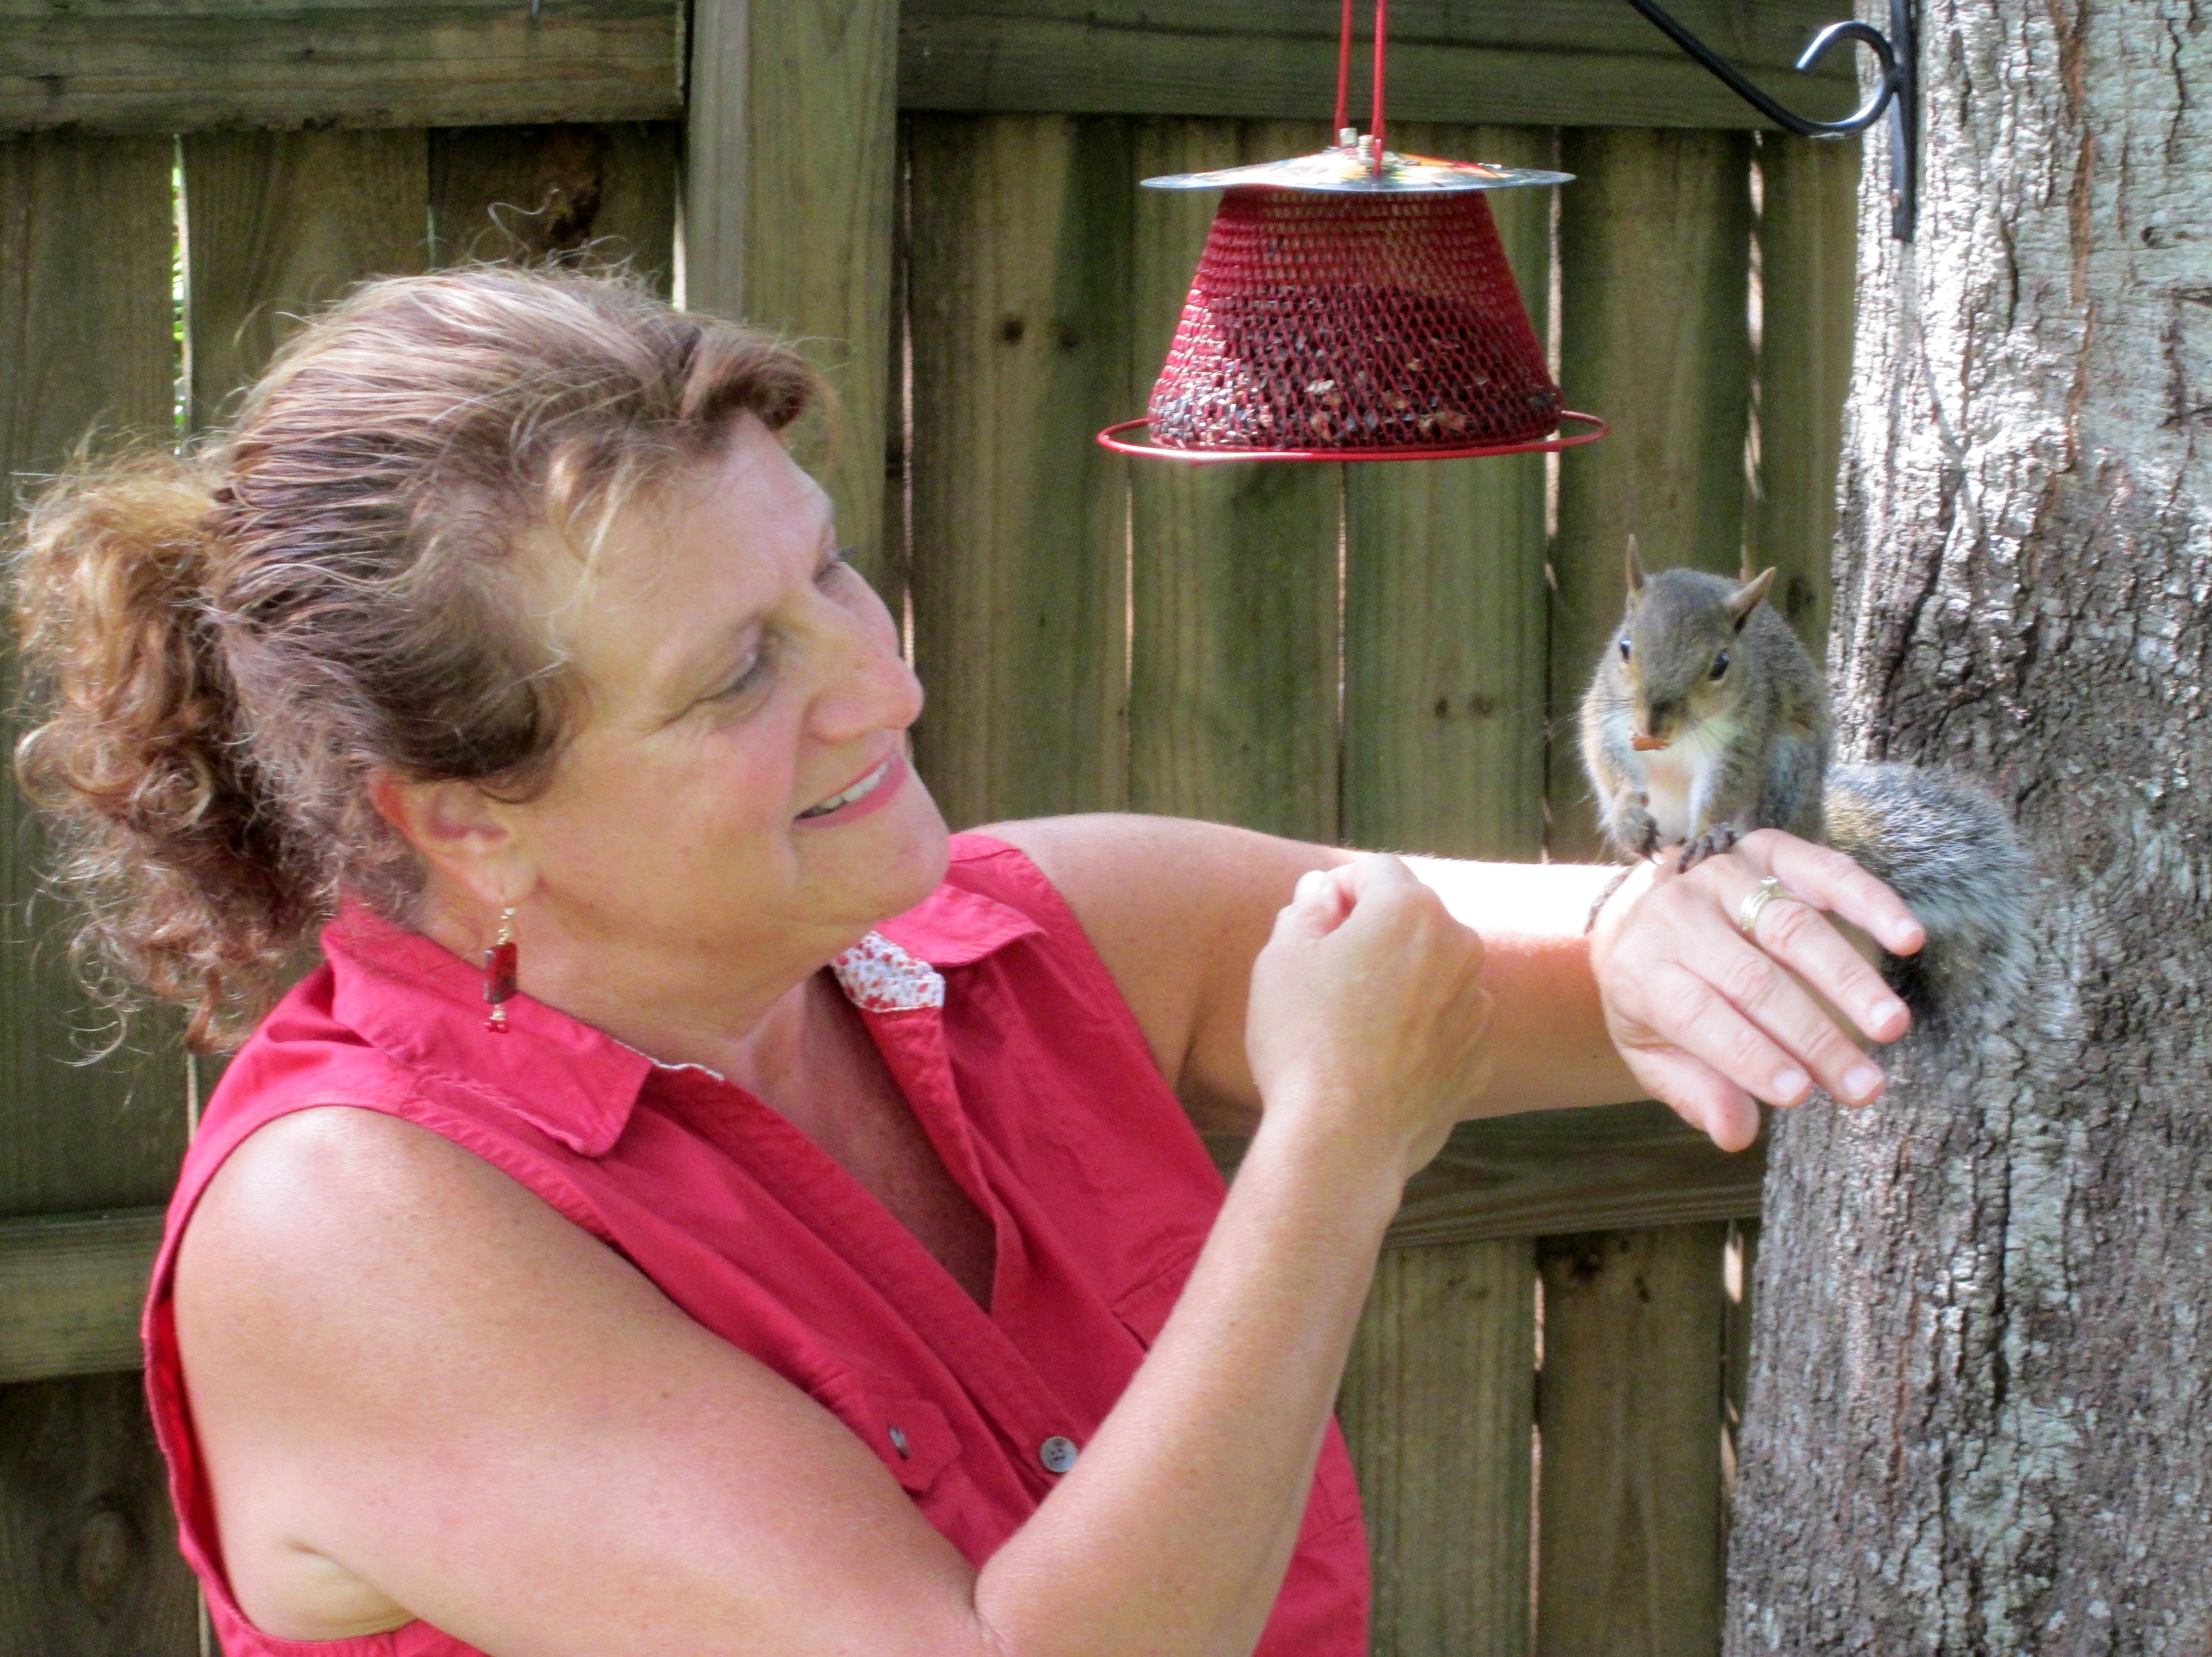 Paula Perry became a wildlife rehabilitator in 2010